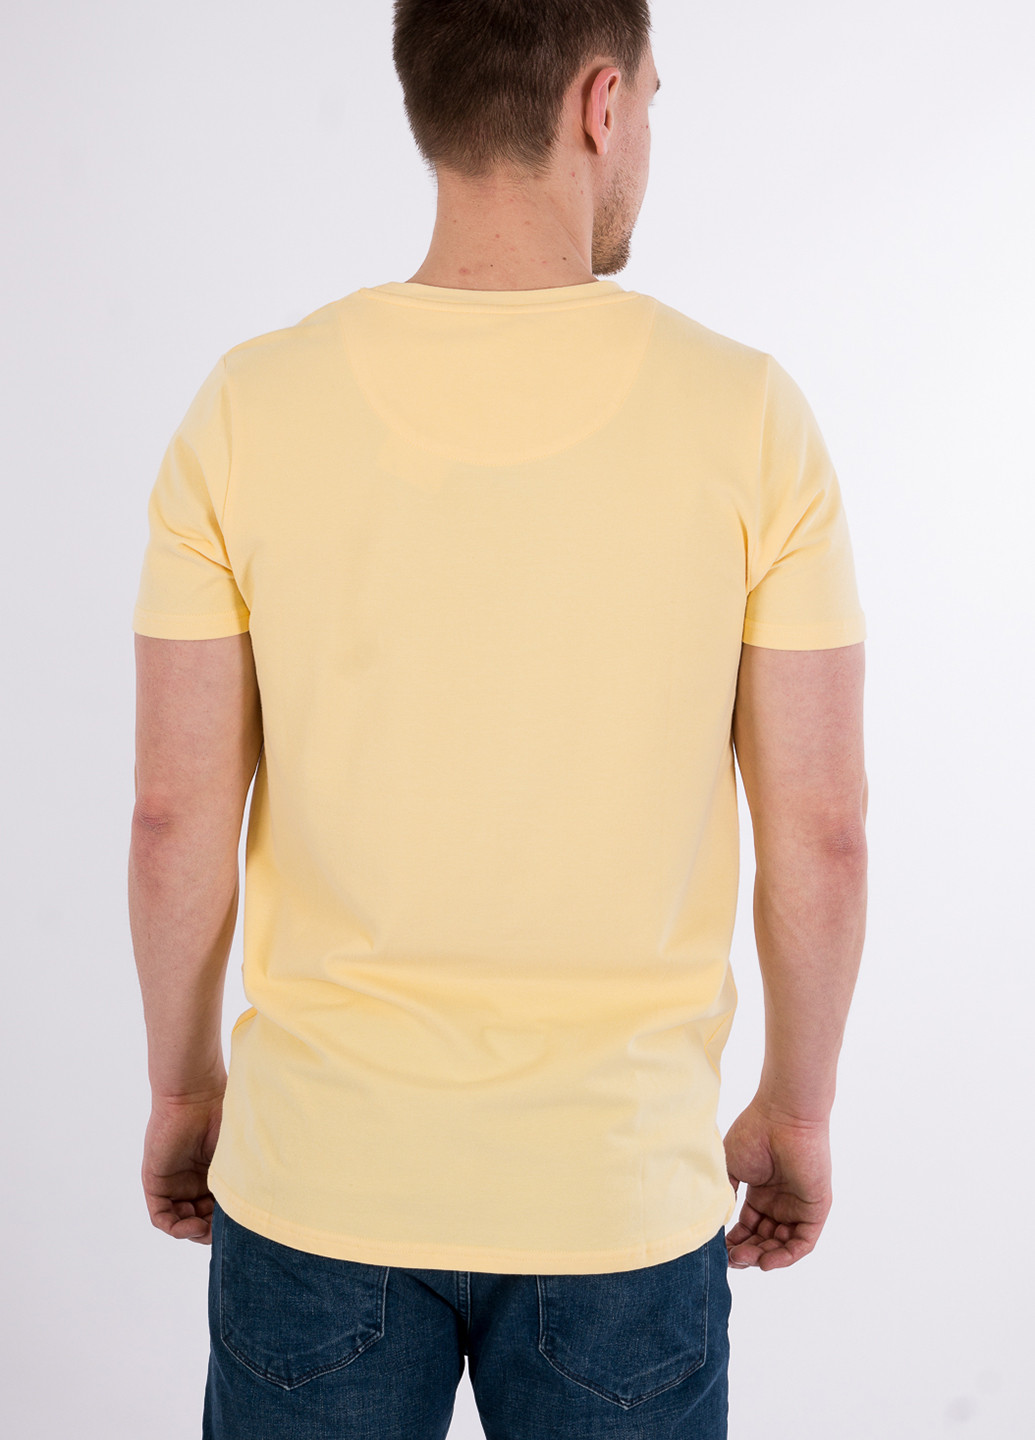 Жовта футболка Cerruti 1881